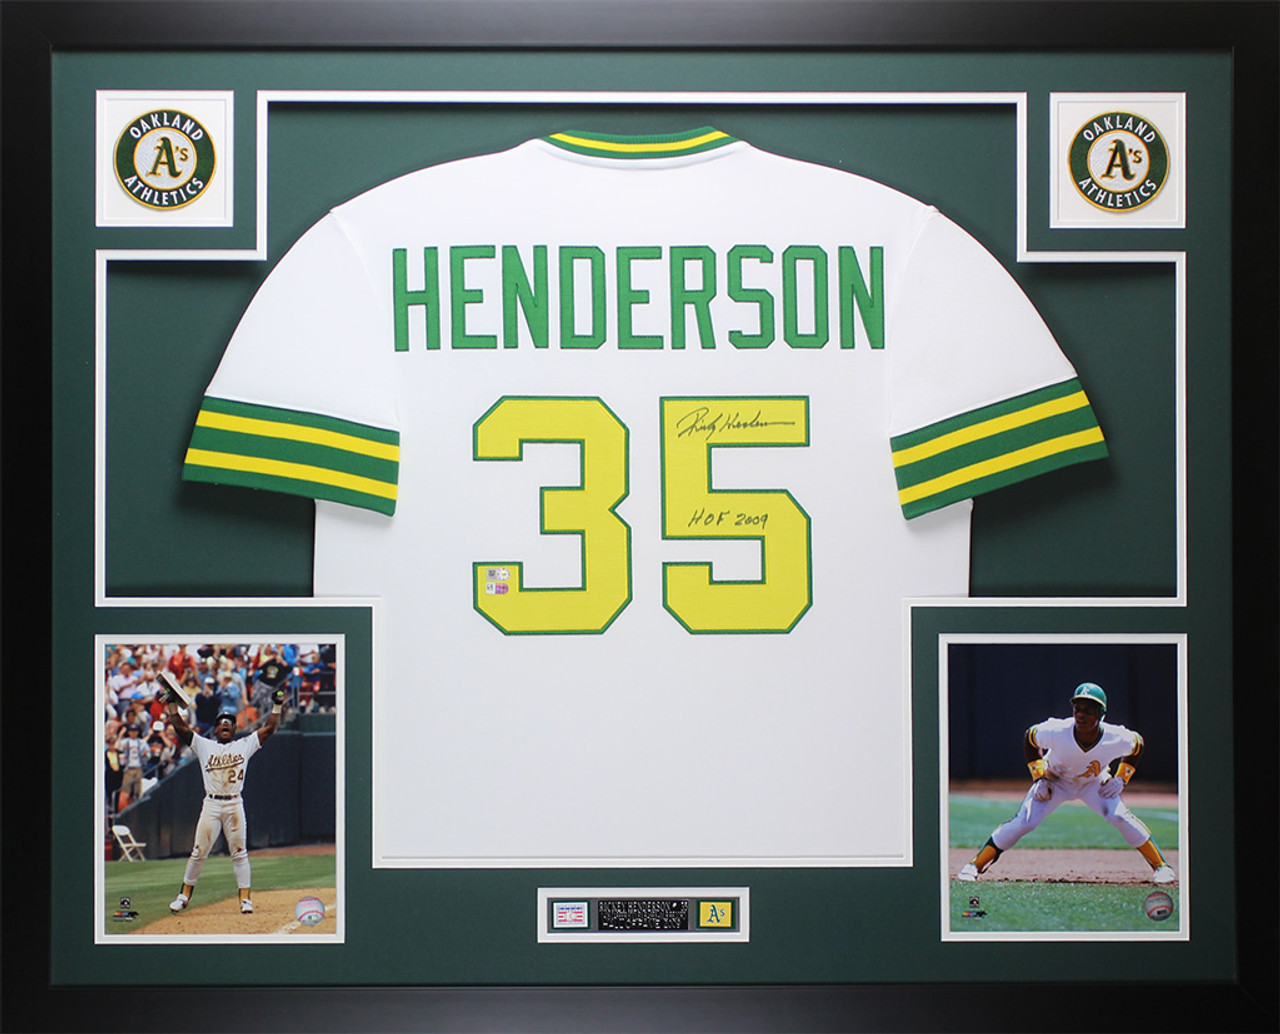 Framed Rickey Henderson Oakland Athletics Autographed White